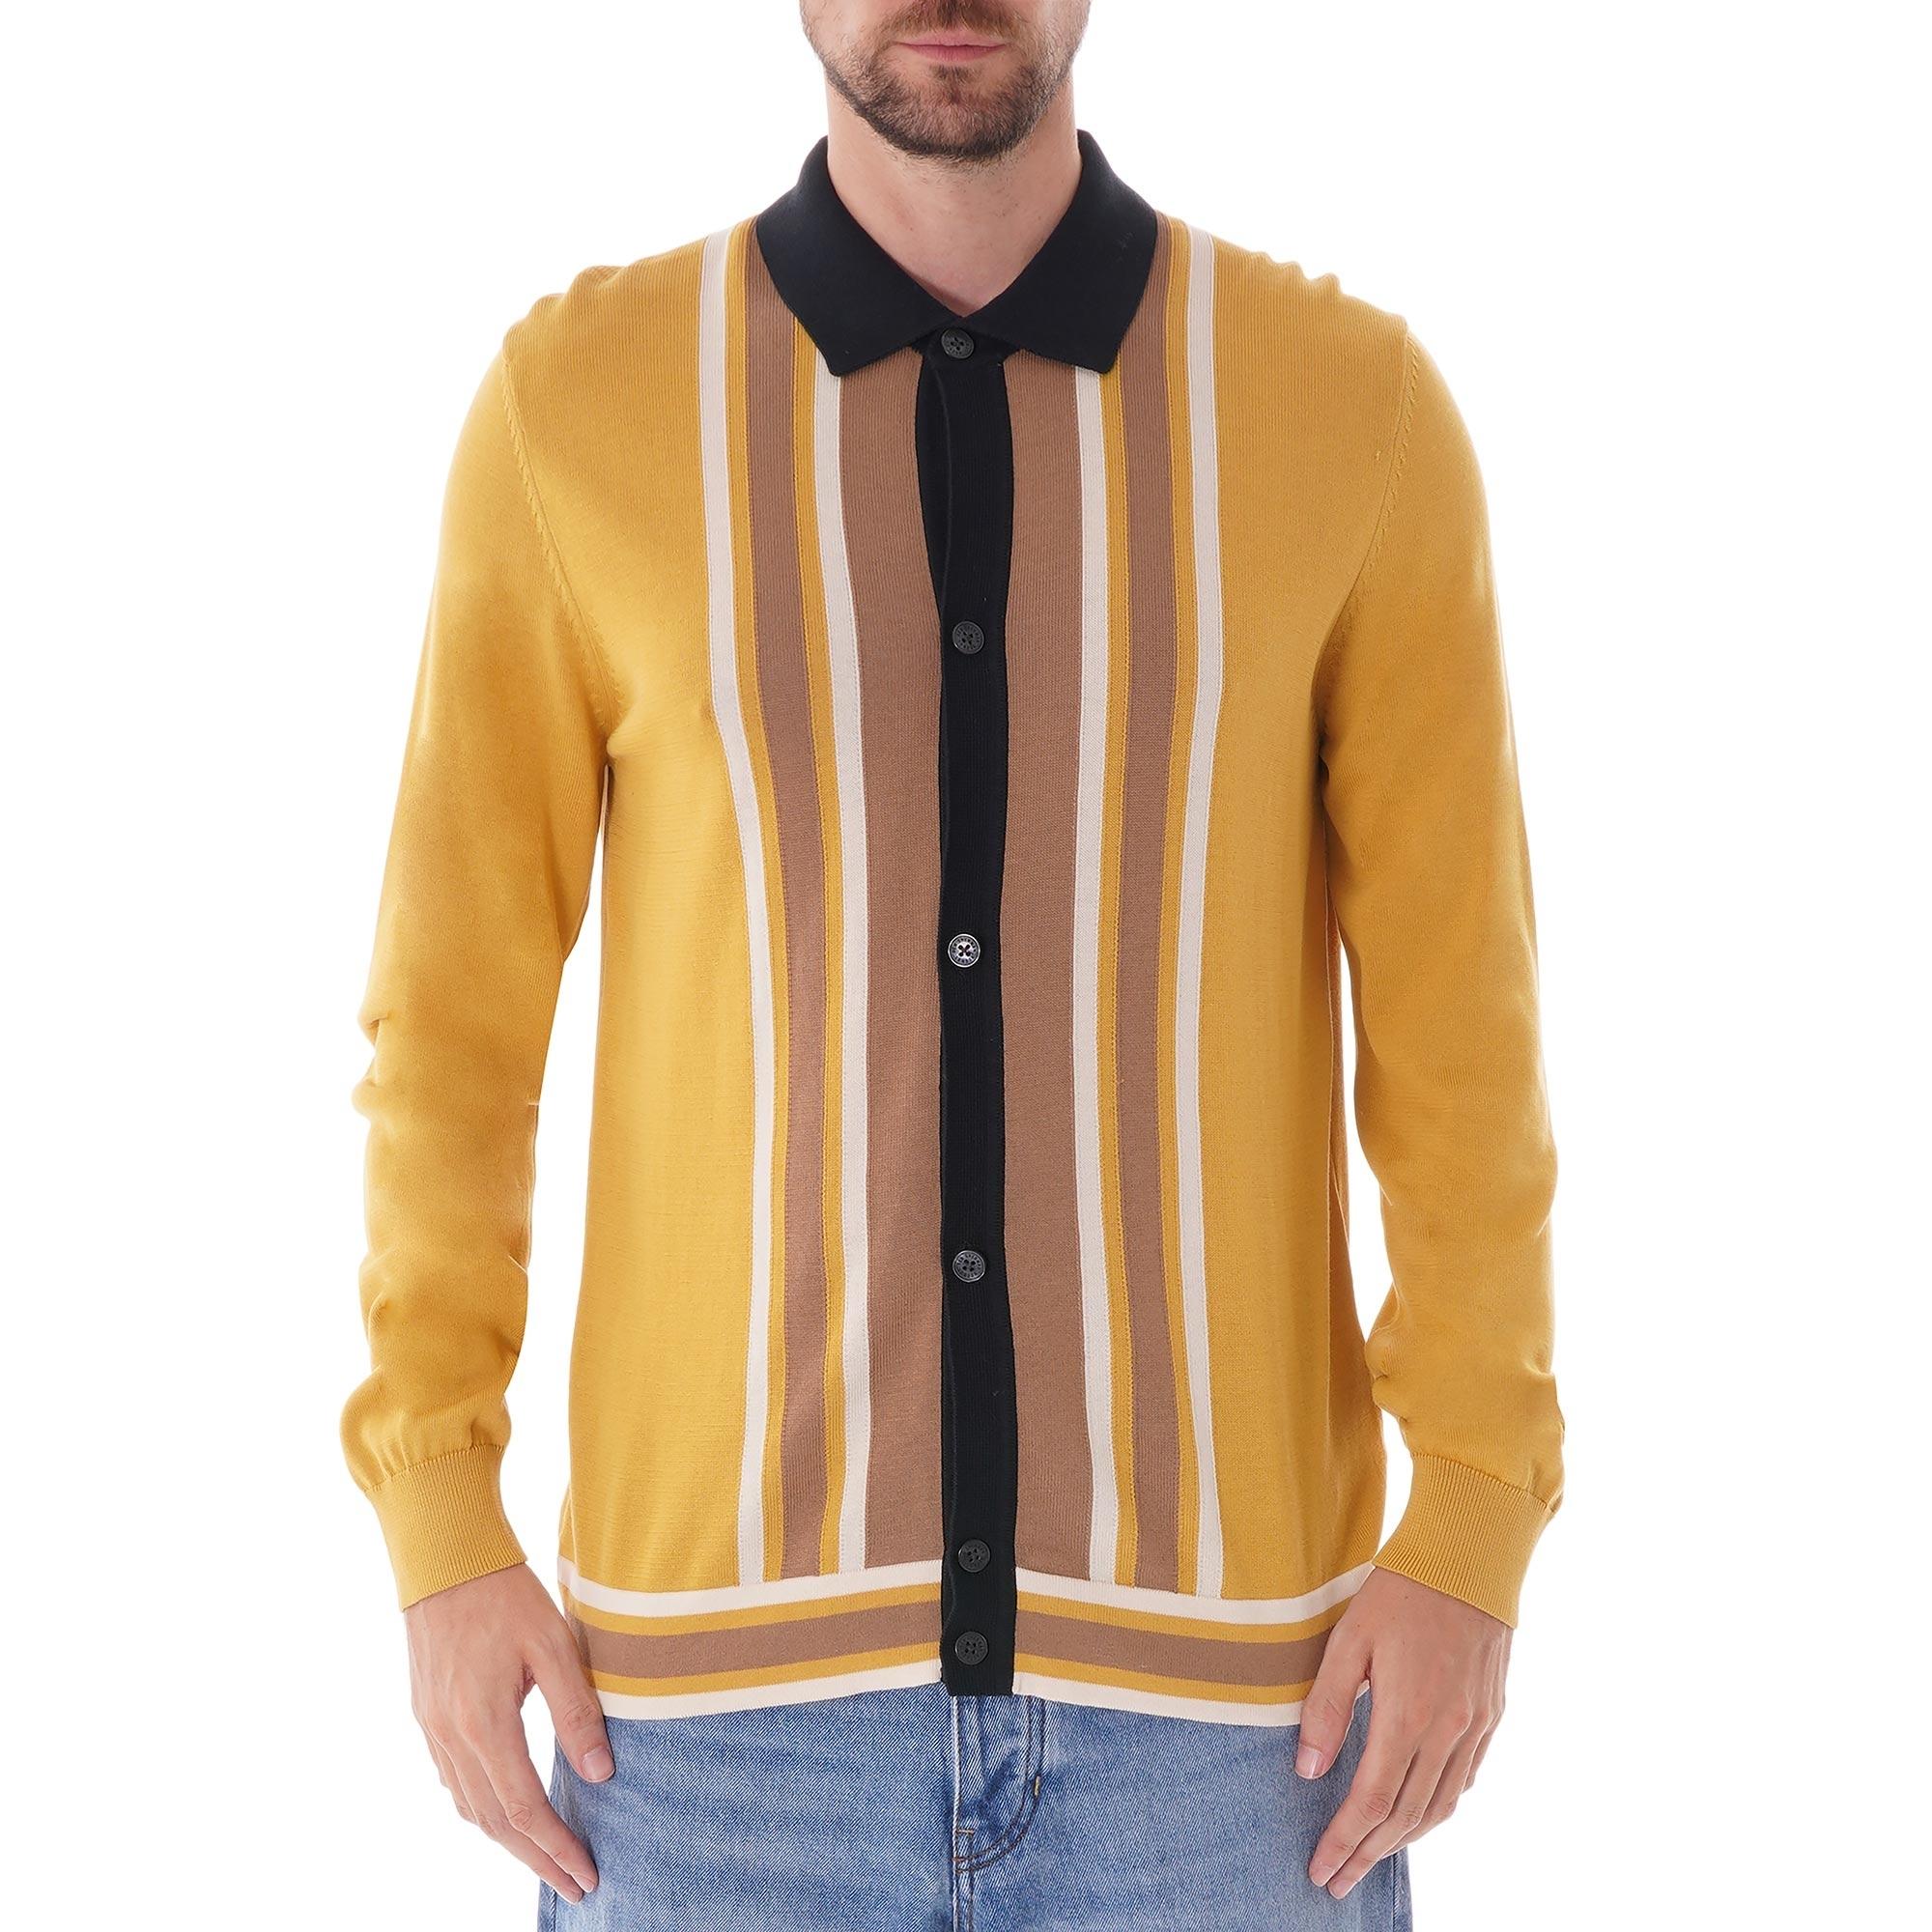 Ben Sherman Cotton Long Sleeve Mod Knit Cardigan for Men - Lyst